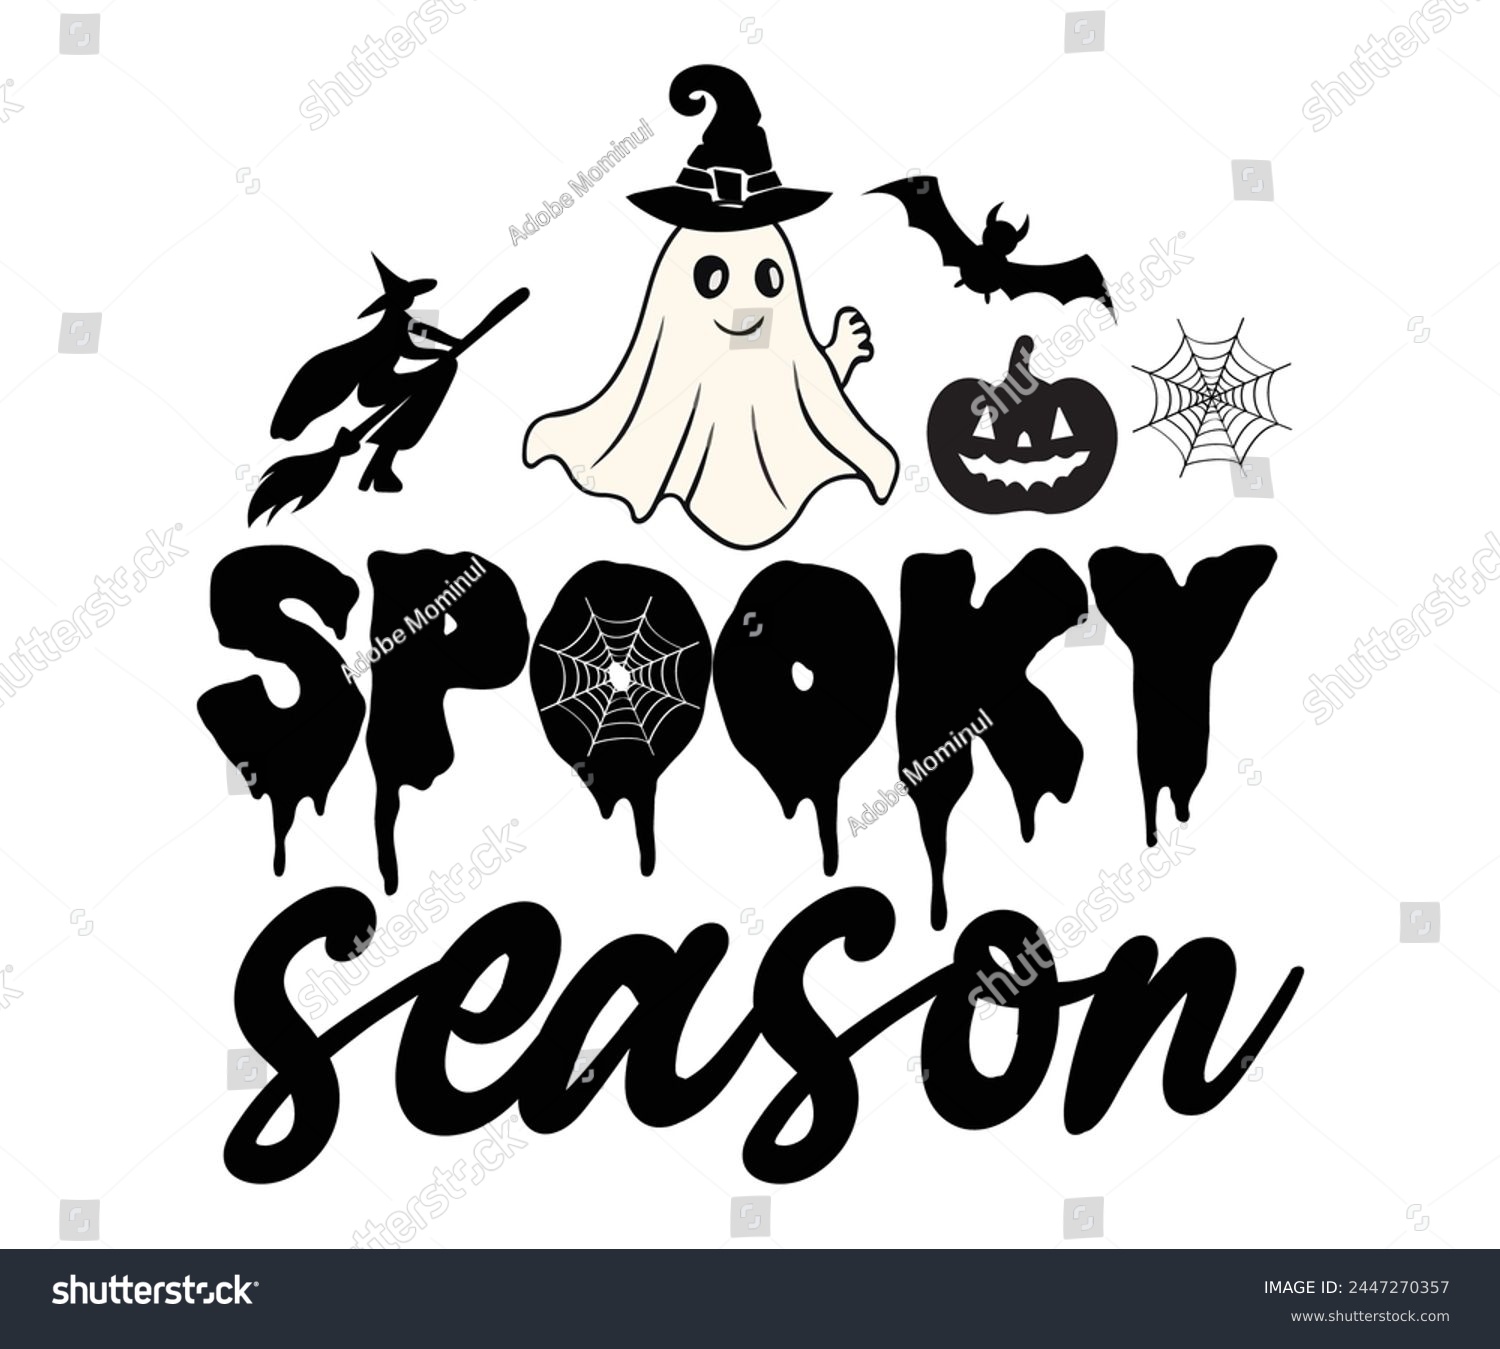 SVG of Spooky Season Svg,Halloween Svg,Typography,Halloween Quotes,Witches Svg,Halloween Party,Halloween Costume,Halloween Gift,Funny Halloween,Spooky Svg,Funny T shirt,Ghost Svg,Cut file svg